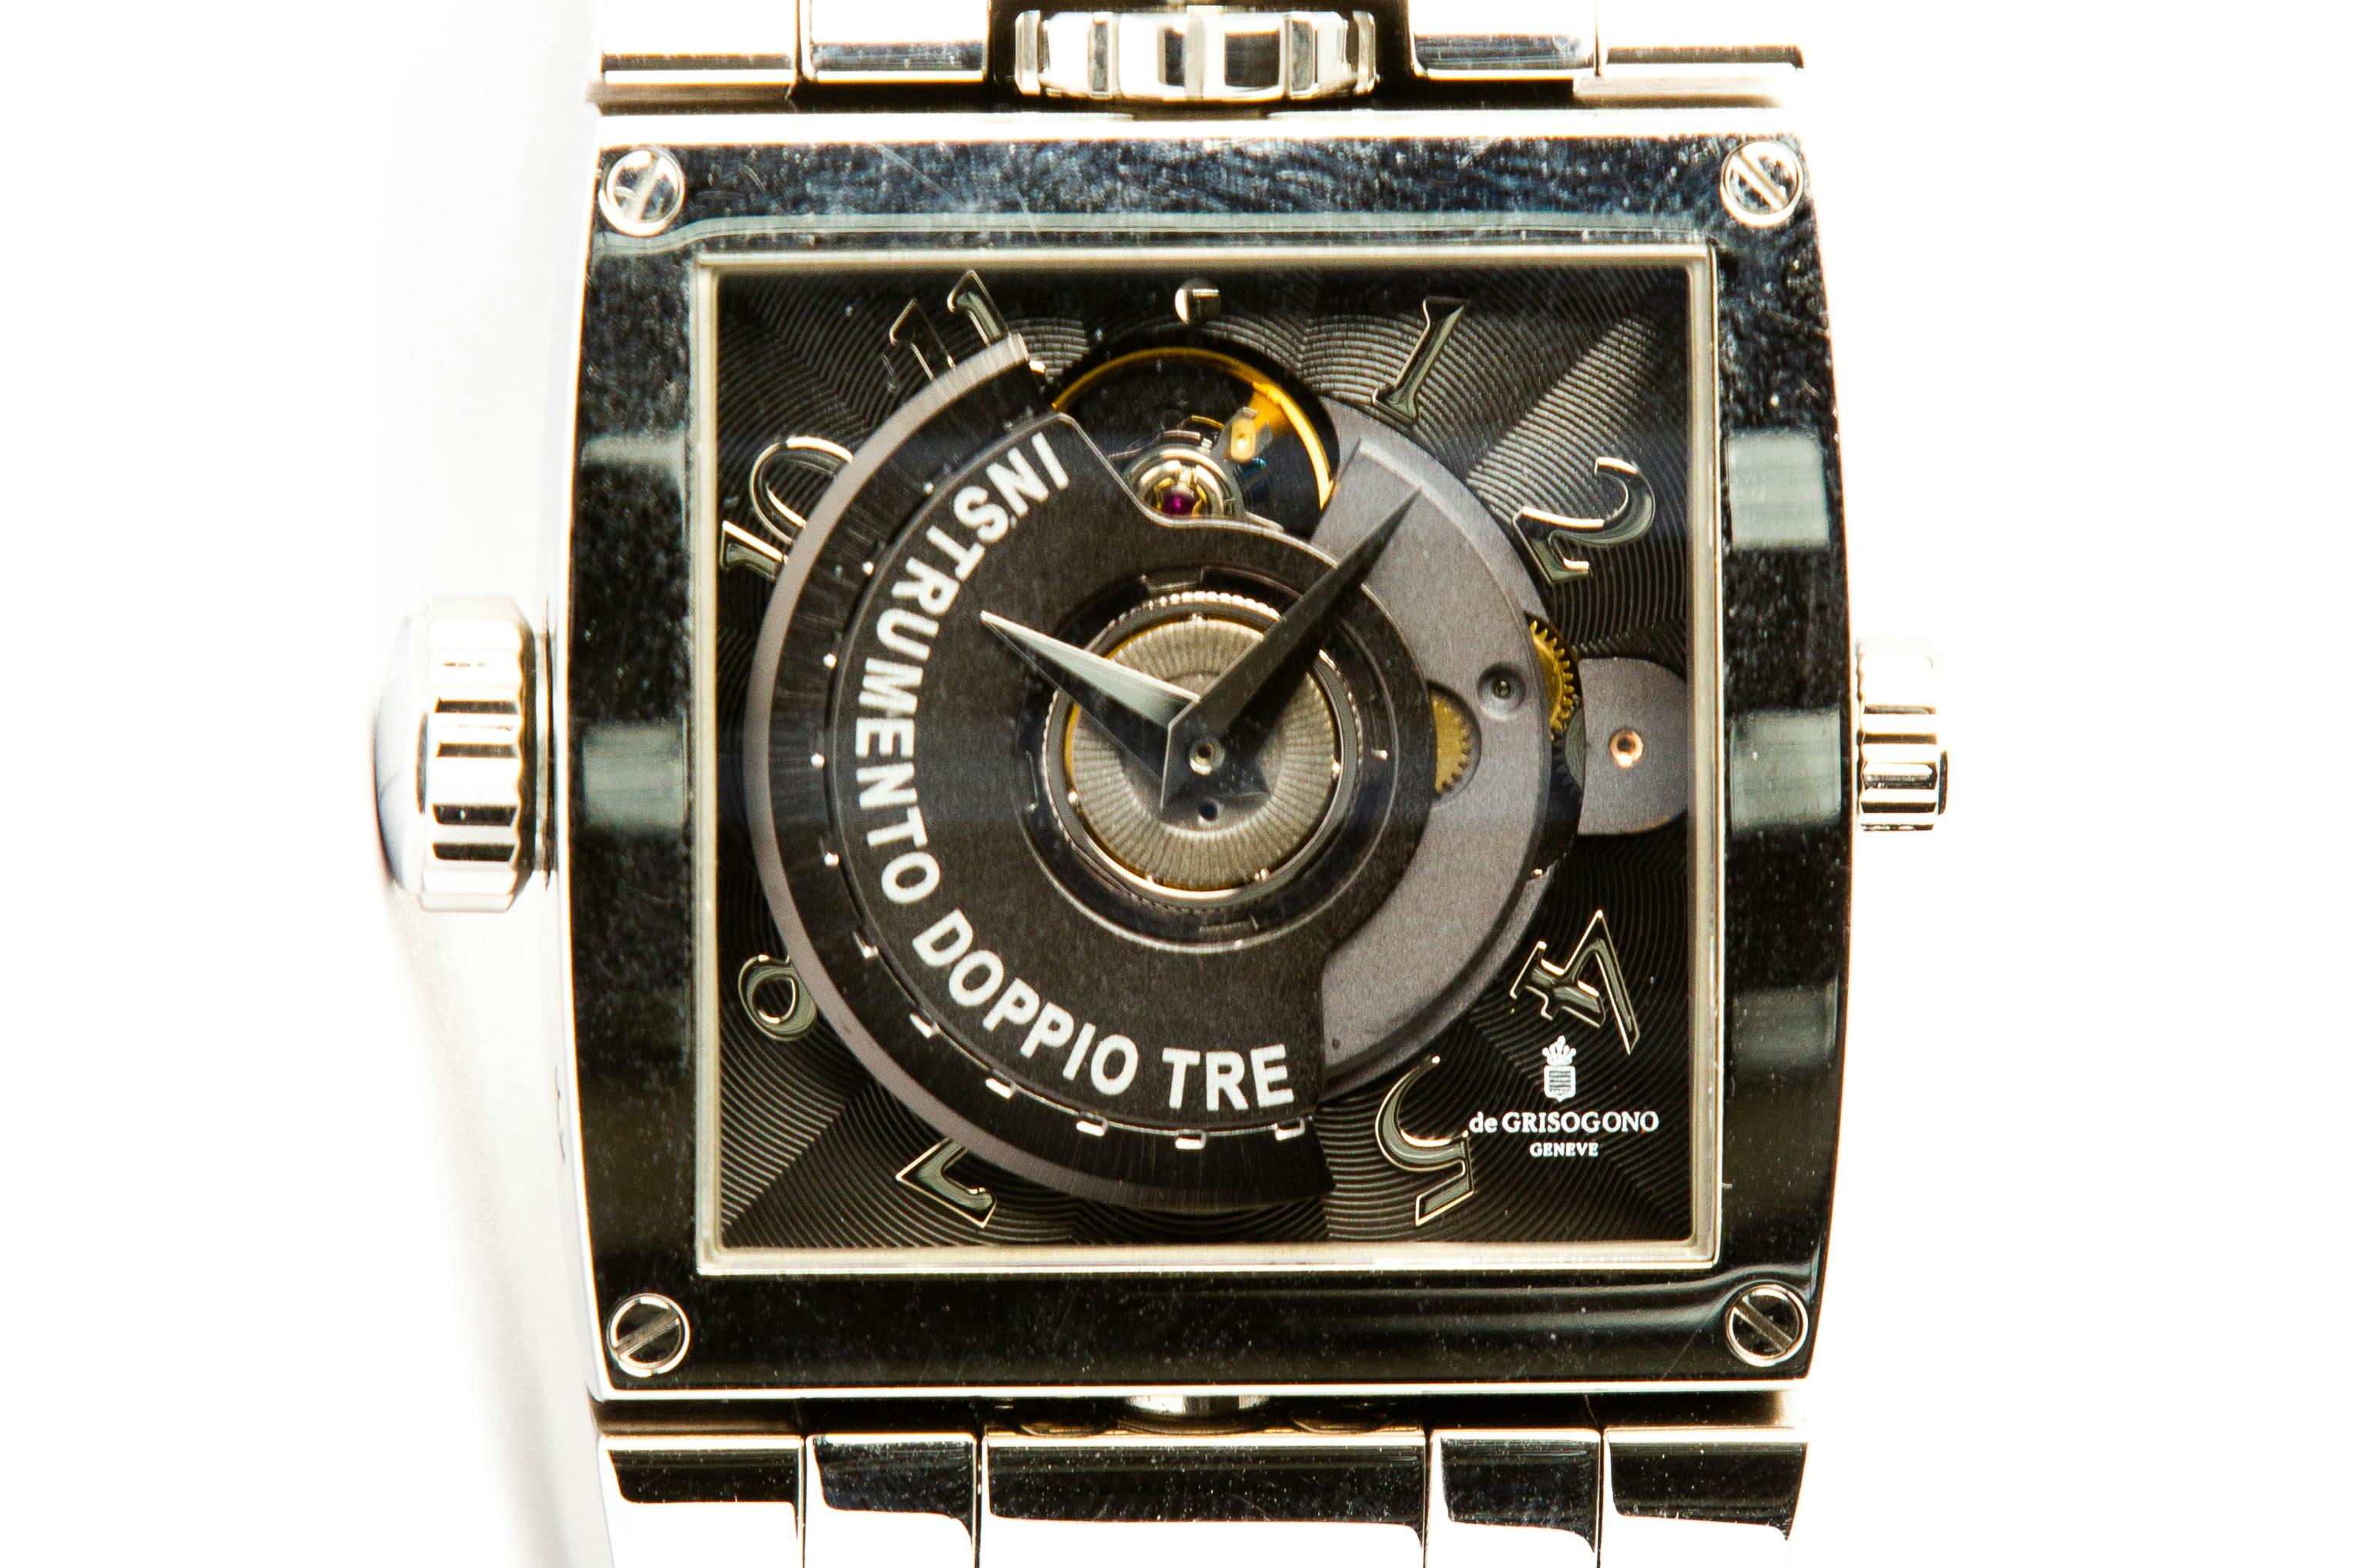 DeGrisogono Instrumento Doppio Tre N04 Men's Watch Model: Doppio-Tre-N04